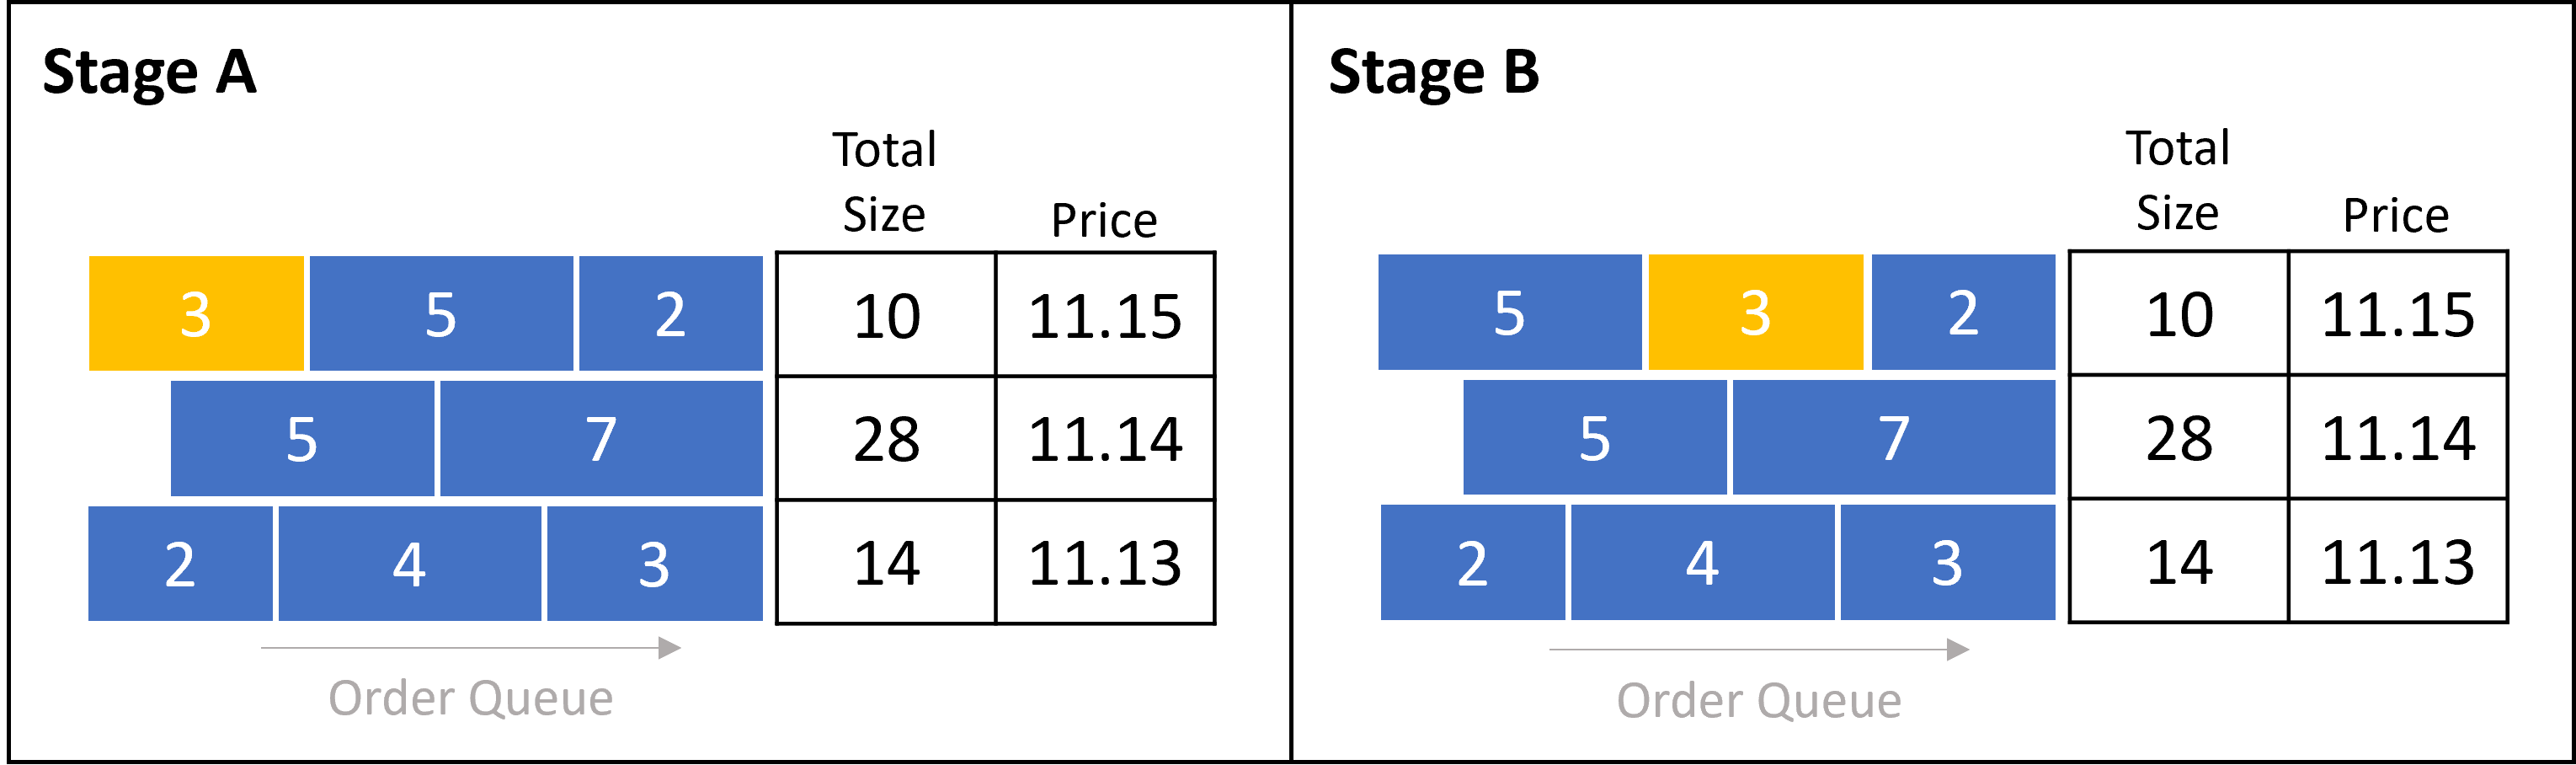 order-structure-comparison-image